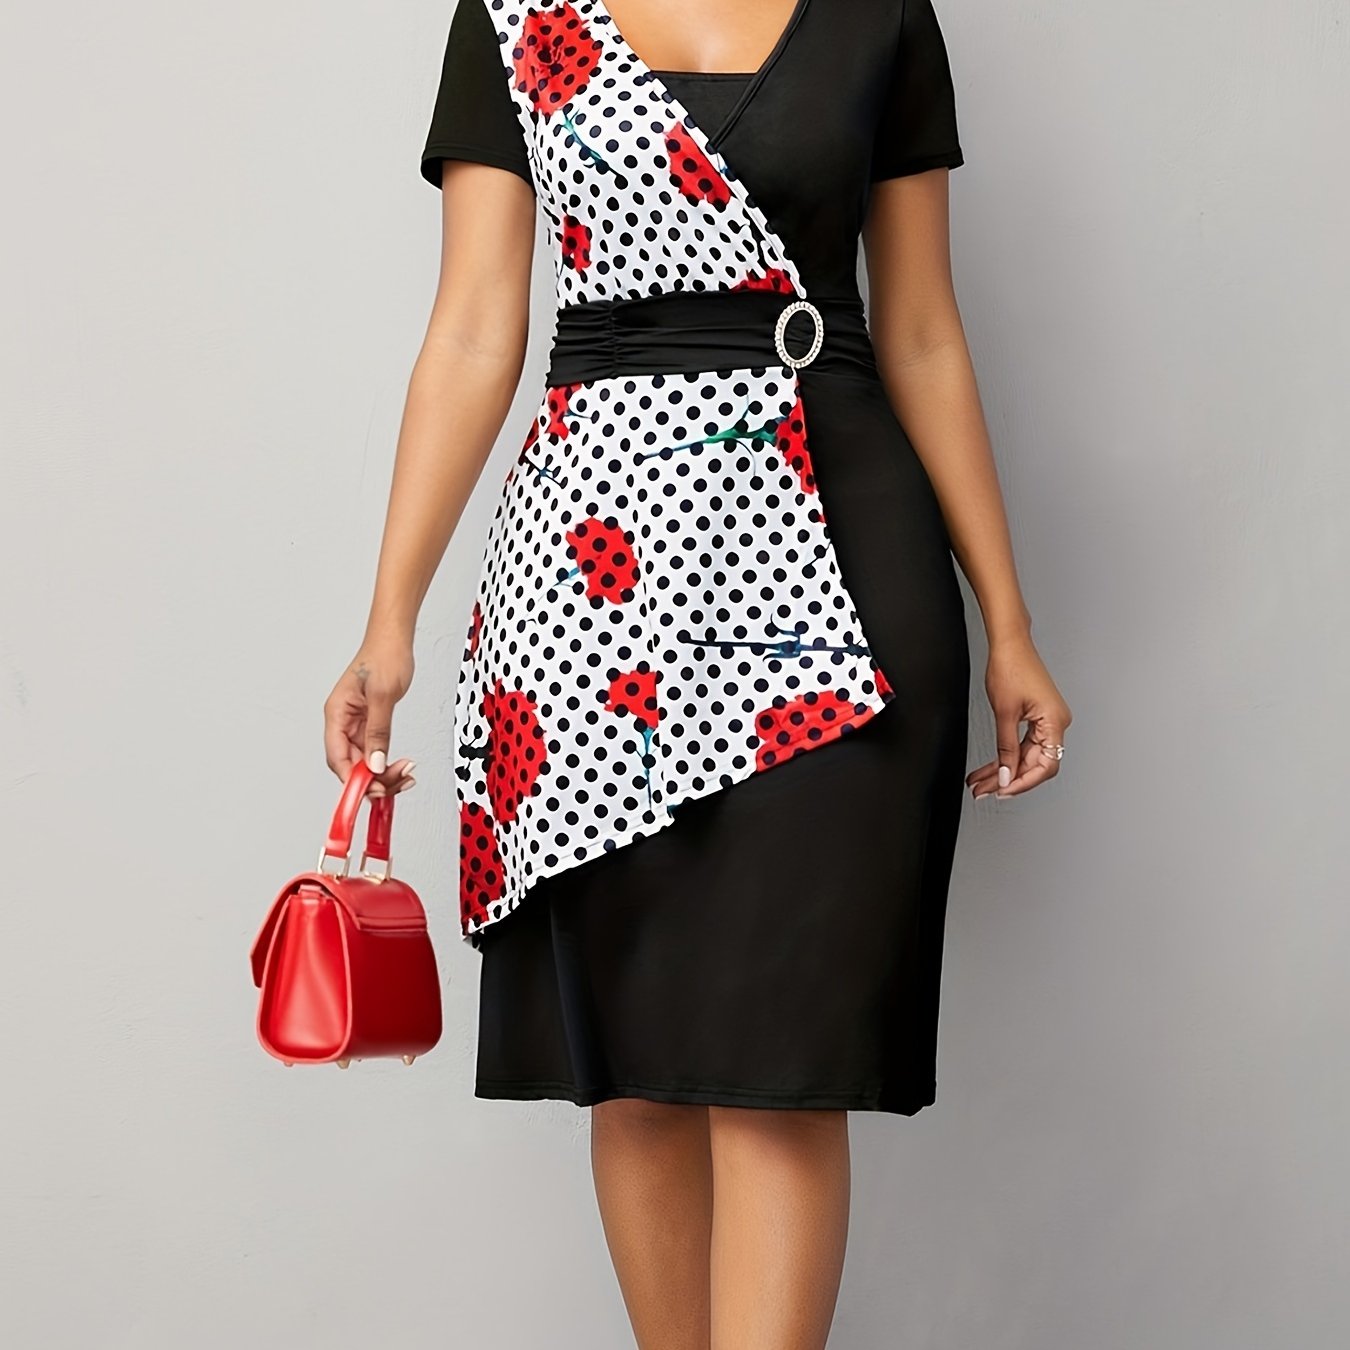 「lovevop」Asymmetrical V Neck Dress, Vintage Short Sleeve Slim Waist Comfy Dress, Women's Clothing